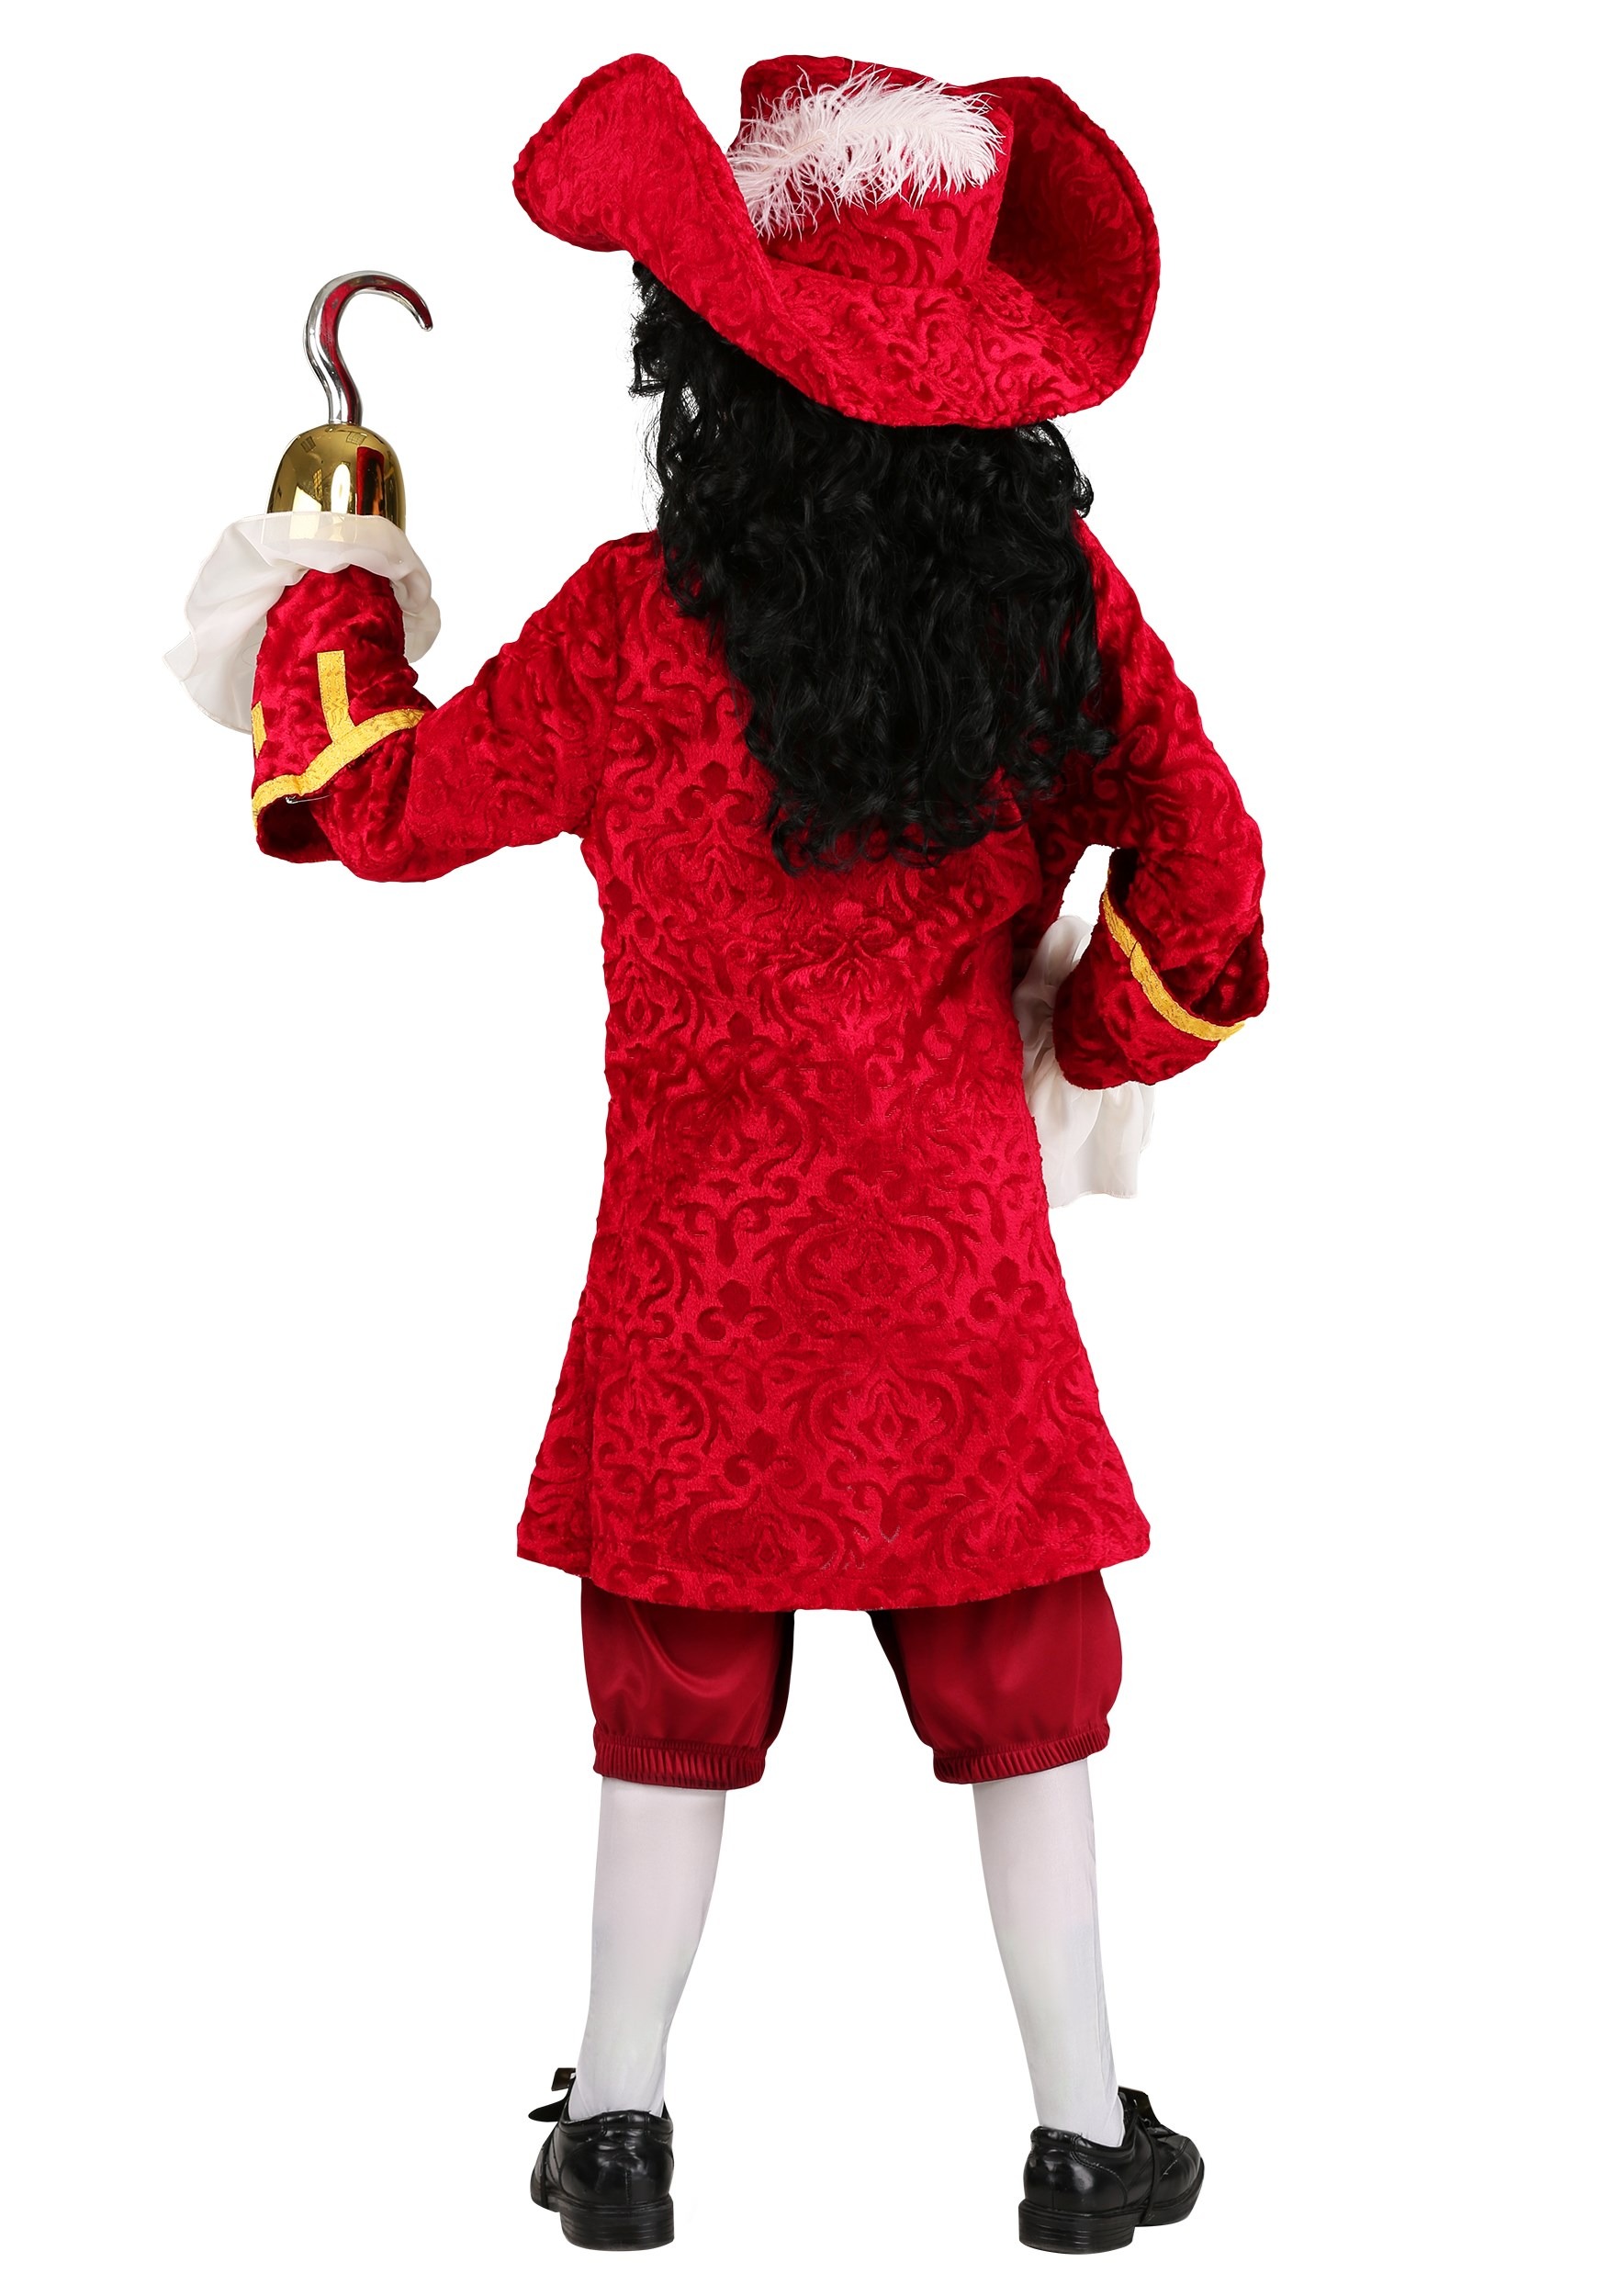 Men's Plus Size Captian Hook Costume, Elite Captian Hook Halloween Outfit,  Red Pirate Captain